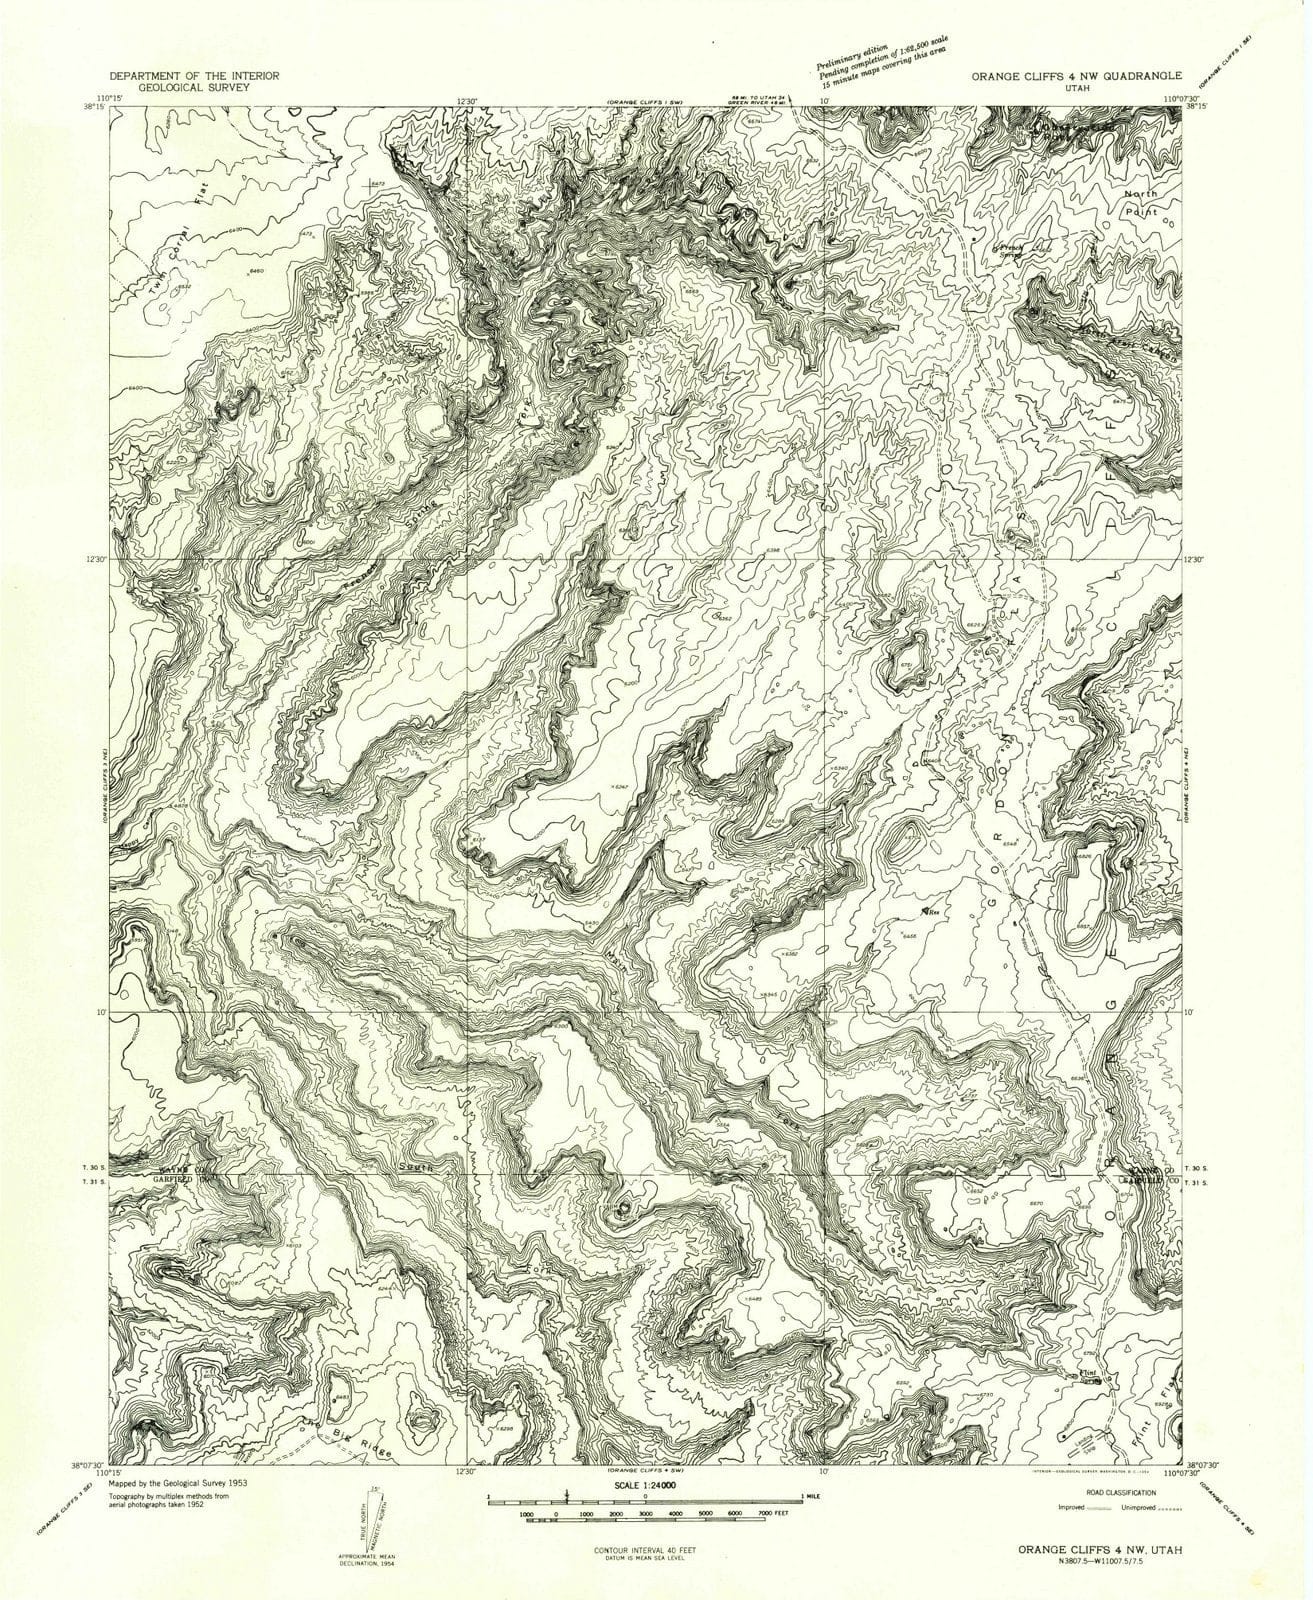 1953 Orange Cliffs 4, UT - Utah - USGS Topographic Map v2